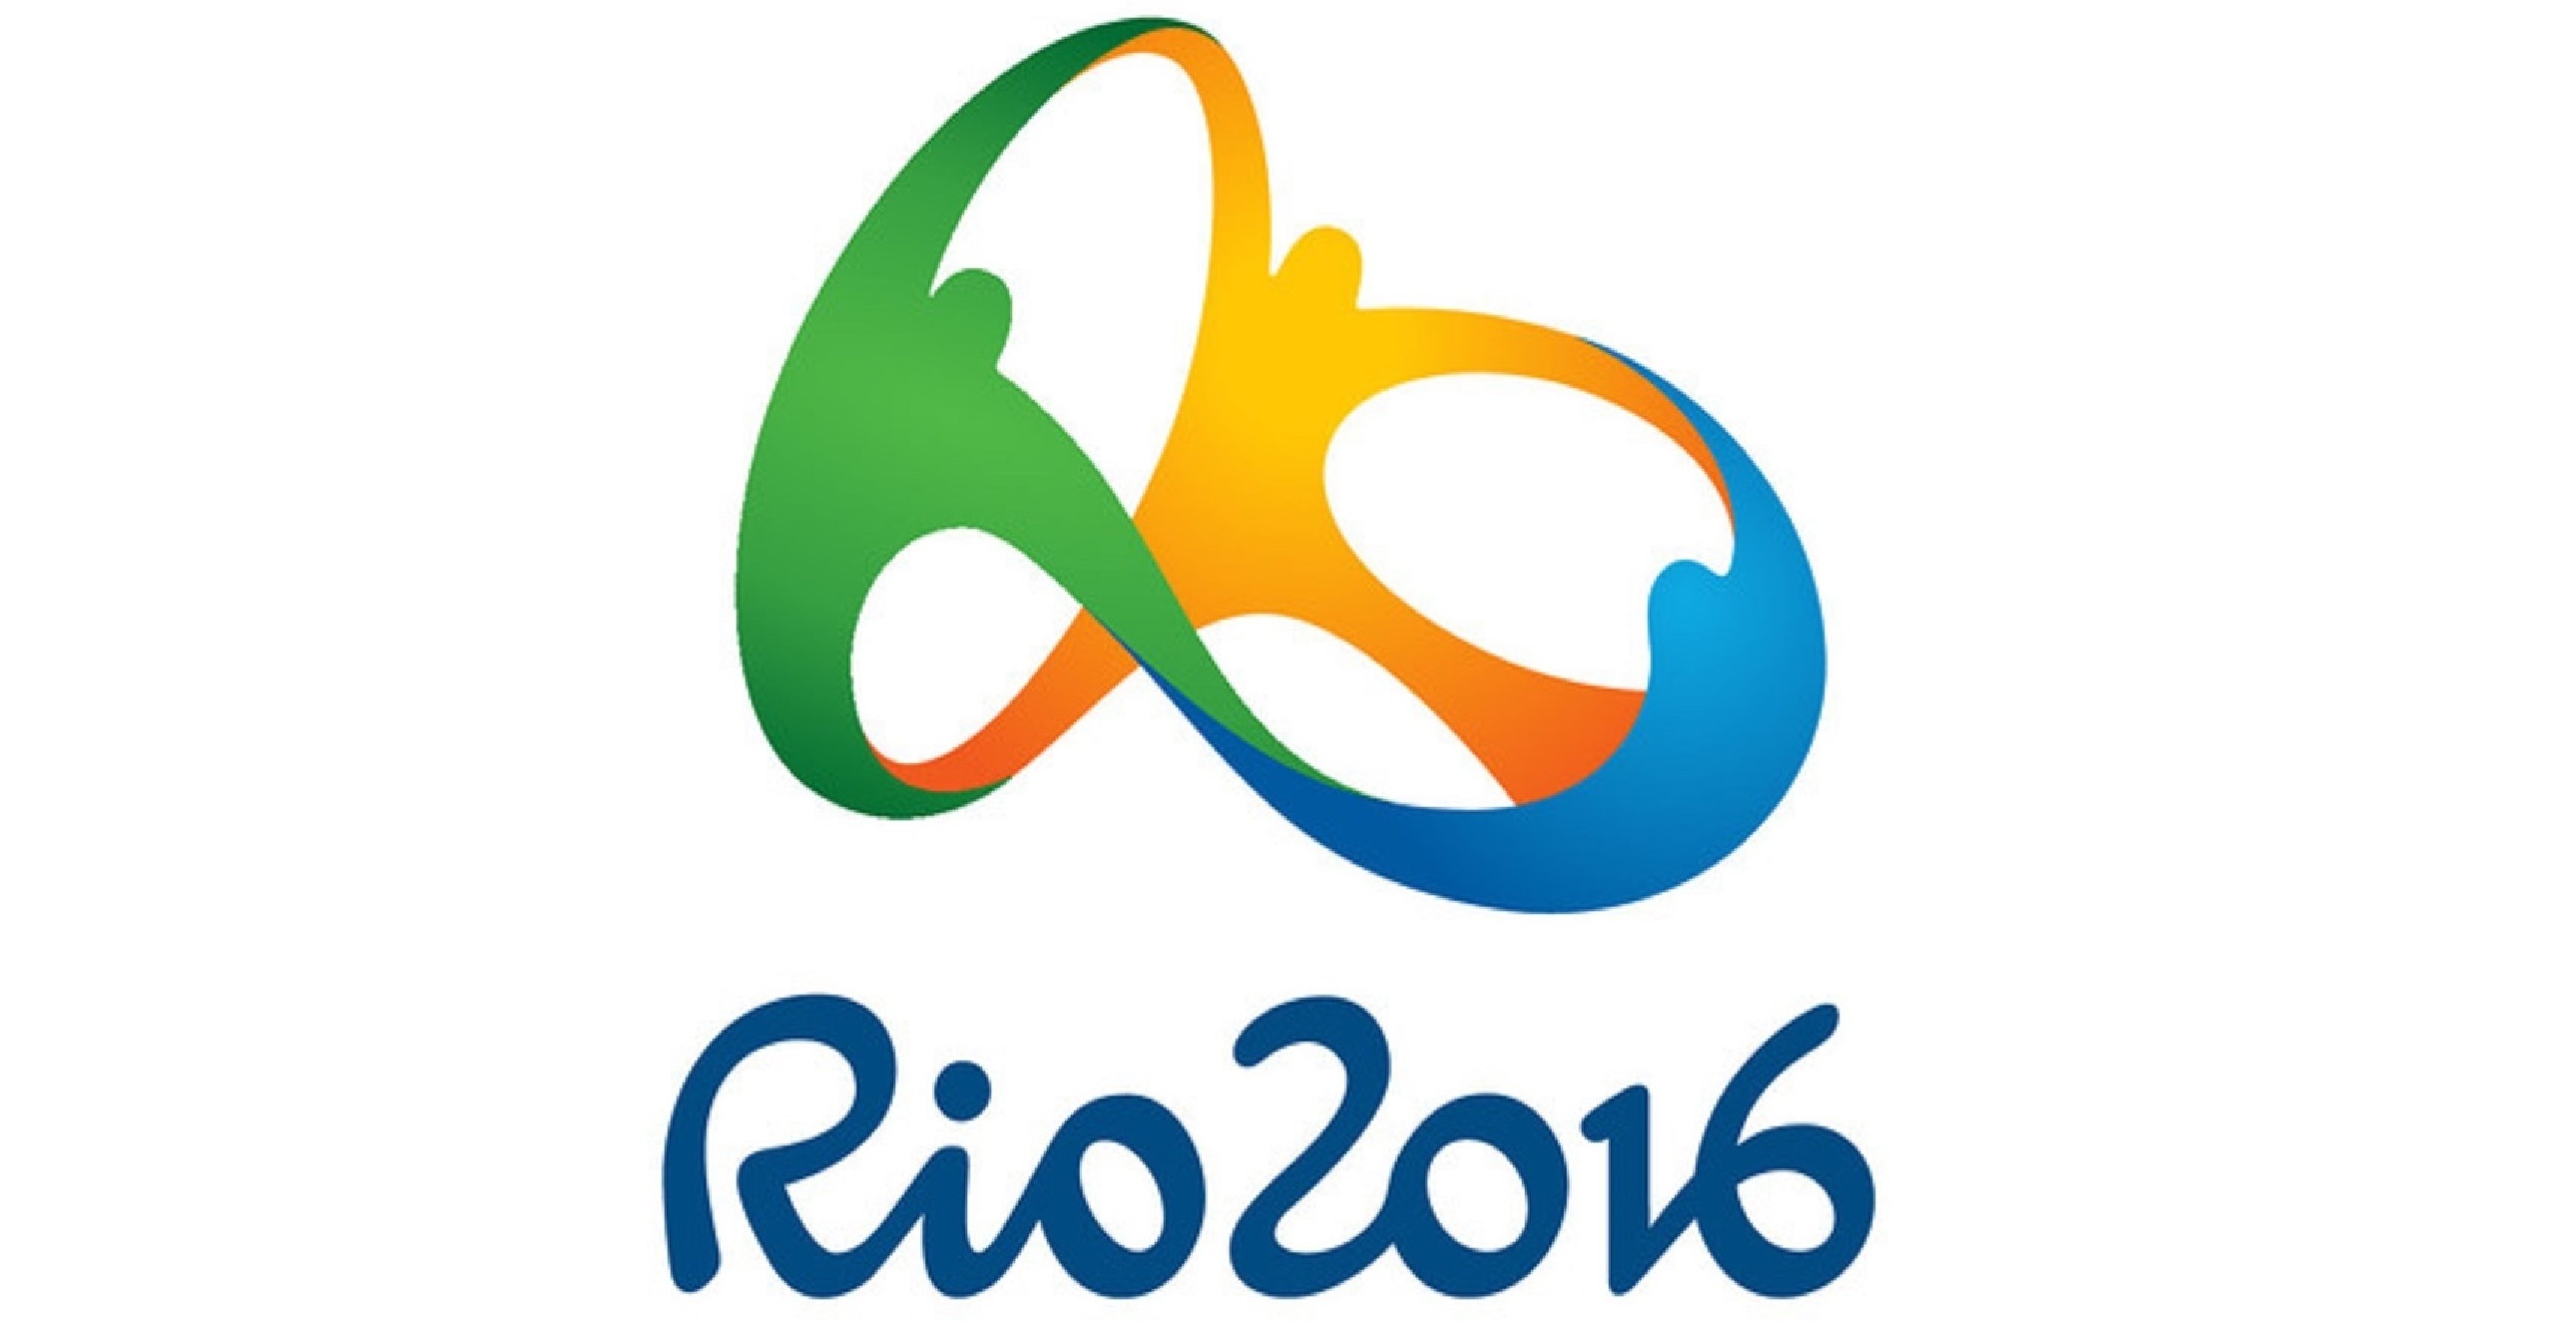 26 июля 2016. Логотип Олимпийских игр 2016 в Рио. Олимпийские игры в Рио де Жанейро 2016. Рио де Жанейро Олимпийские игры эмблема. Летние Олимпийские игры 2016 логотип.